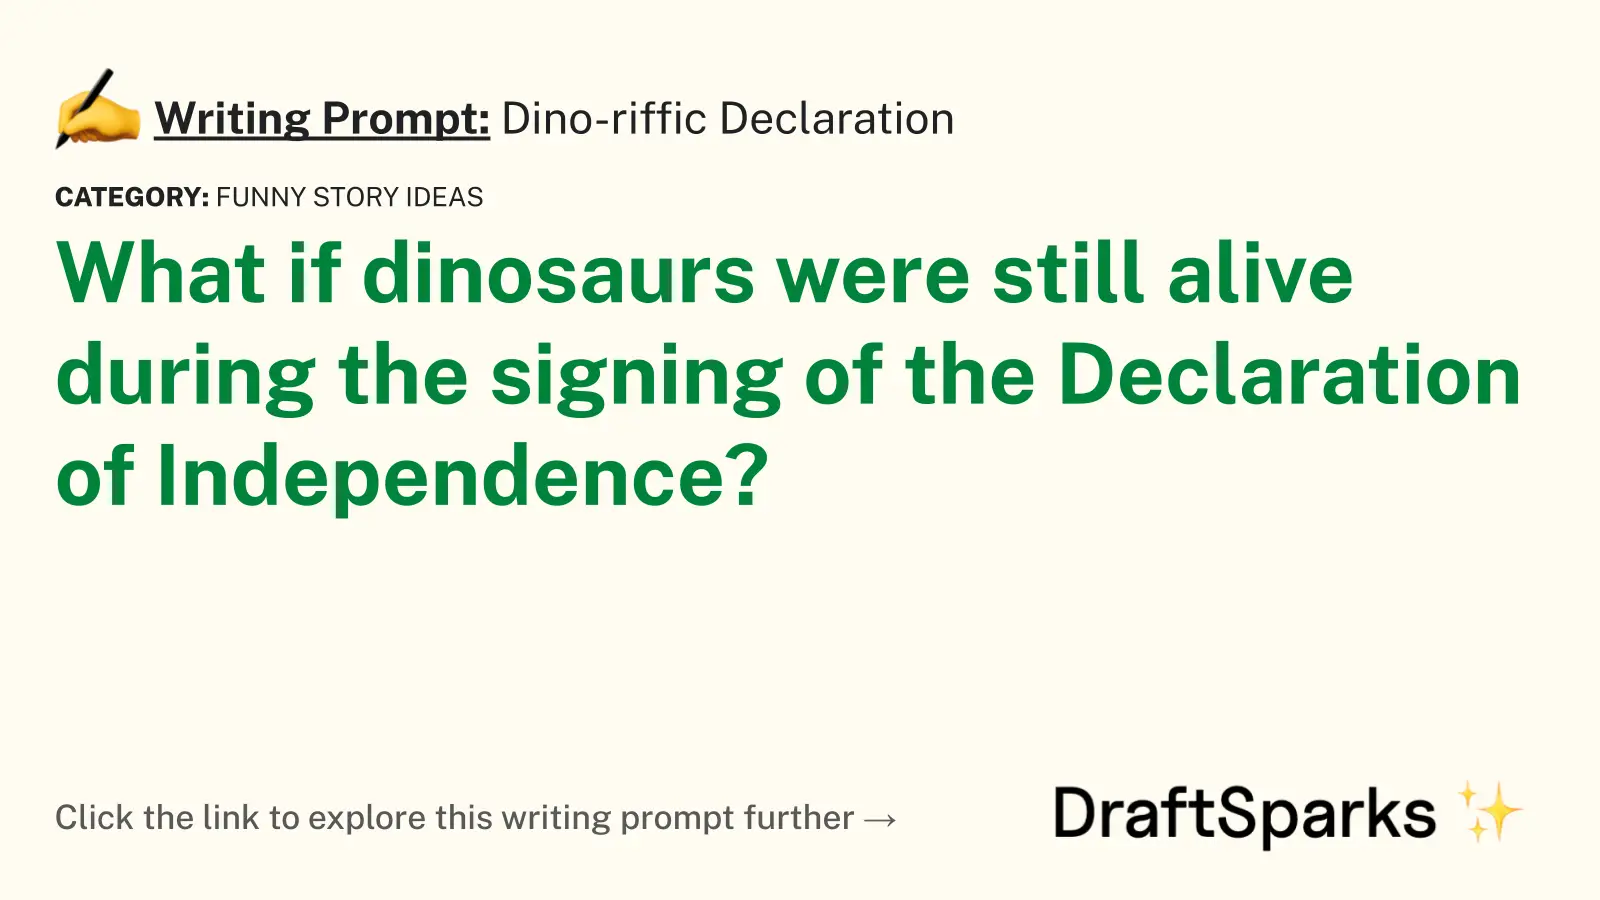 Dino-riffic Declaration